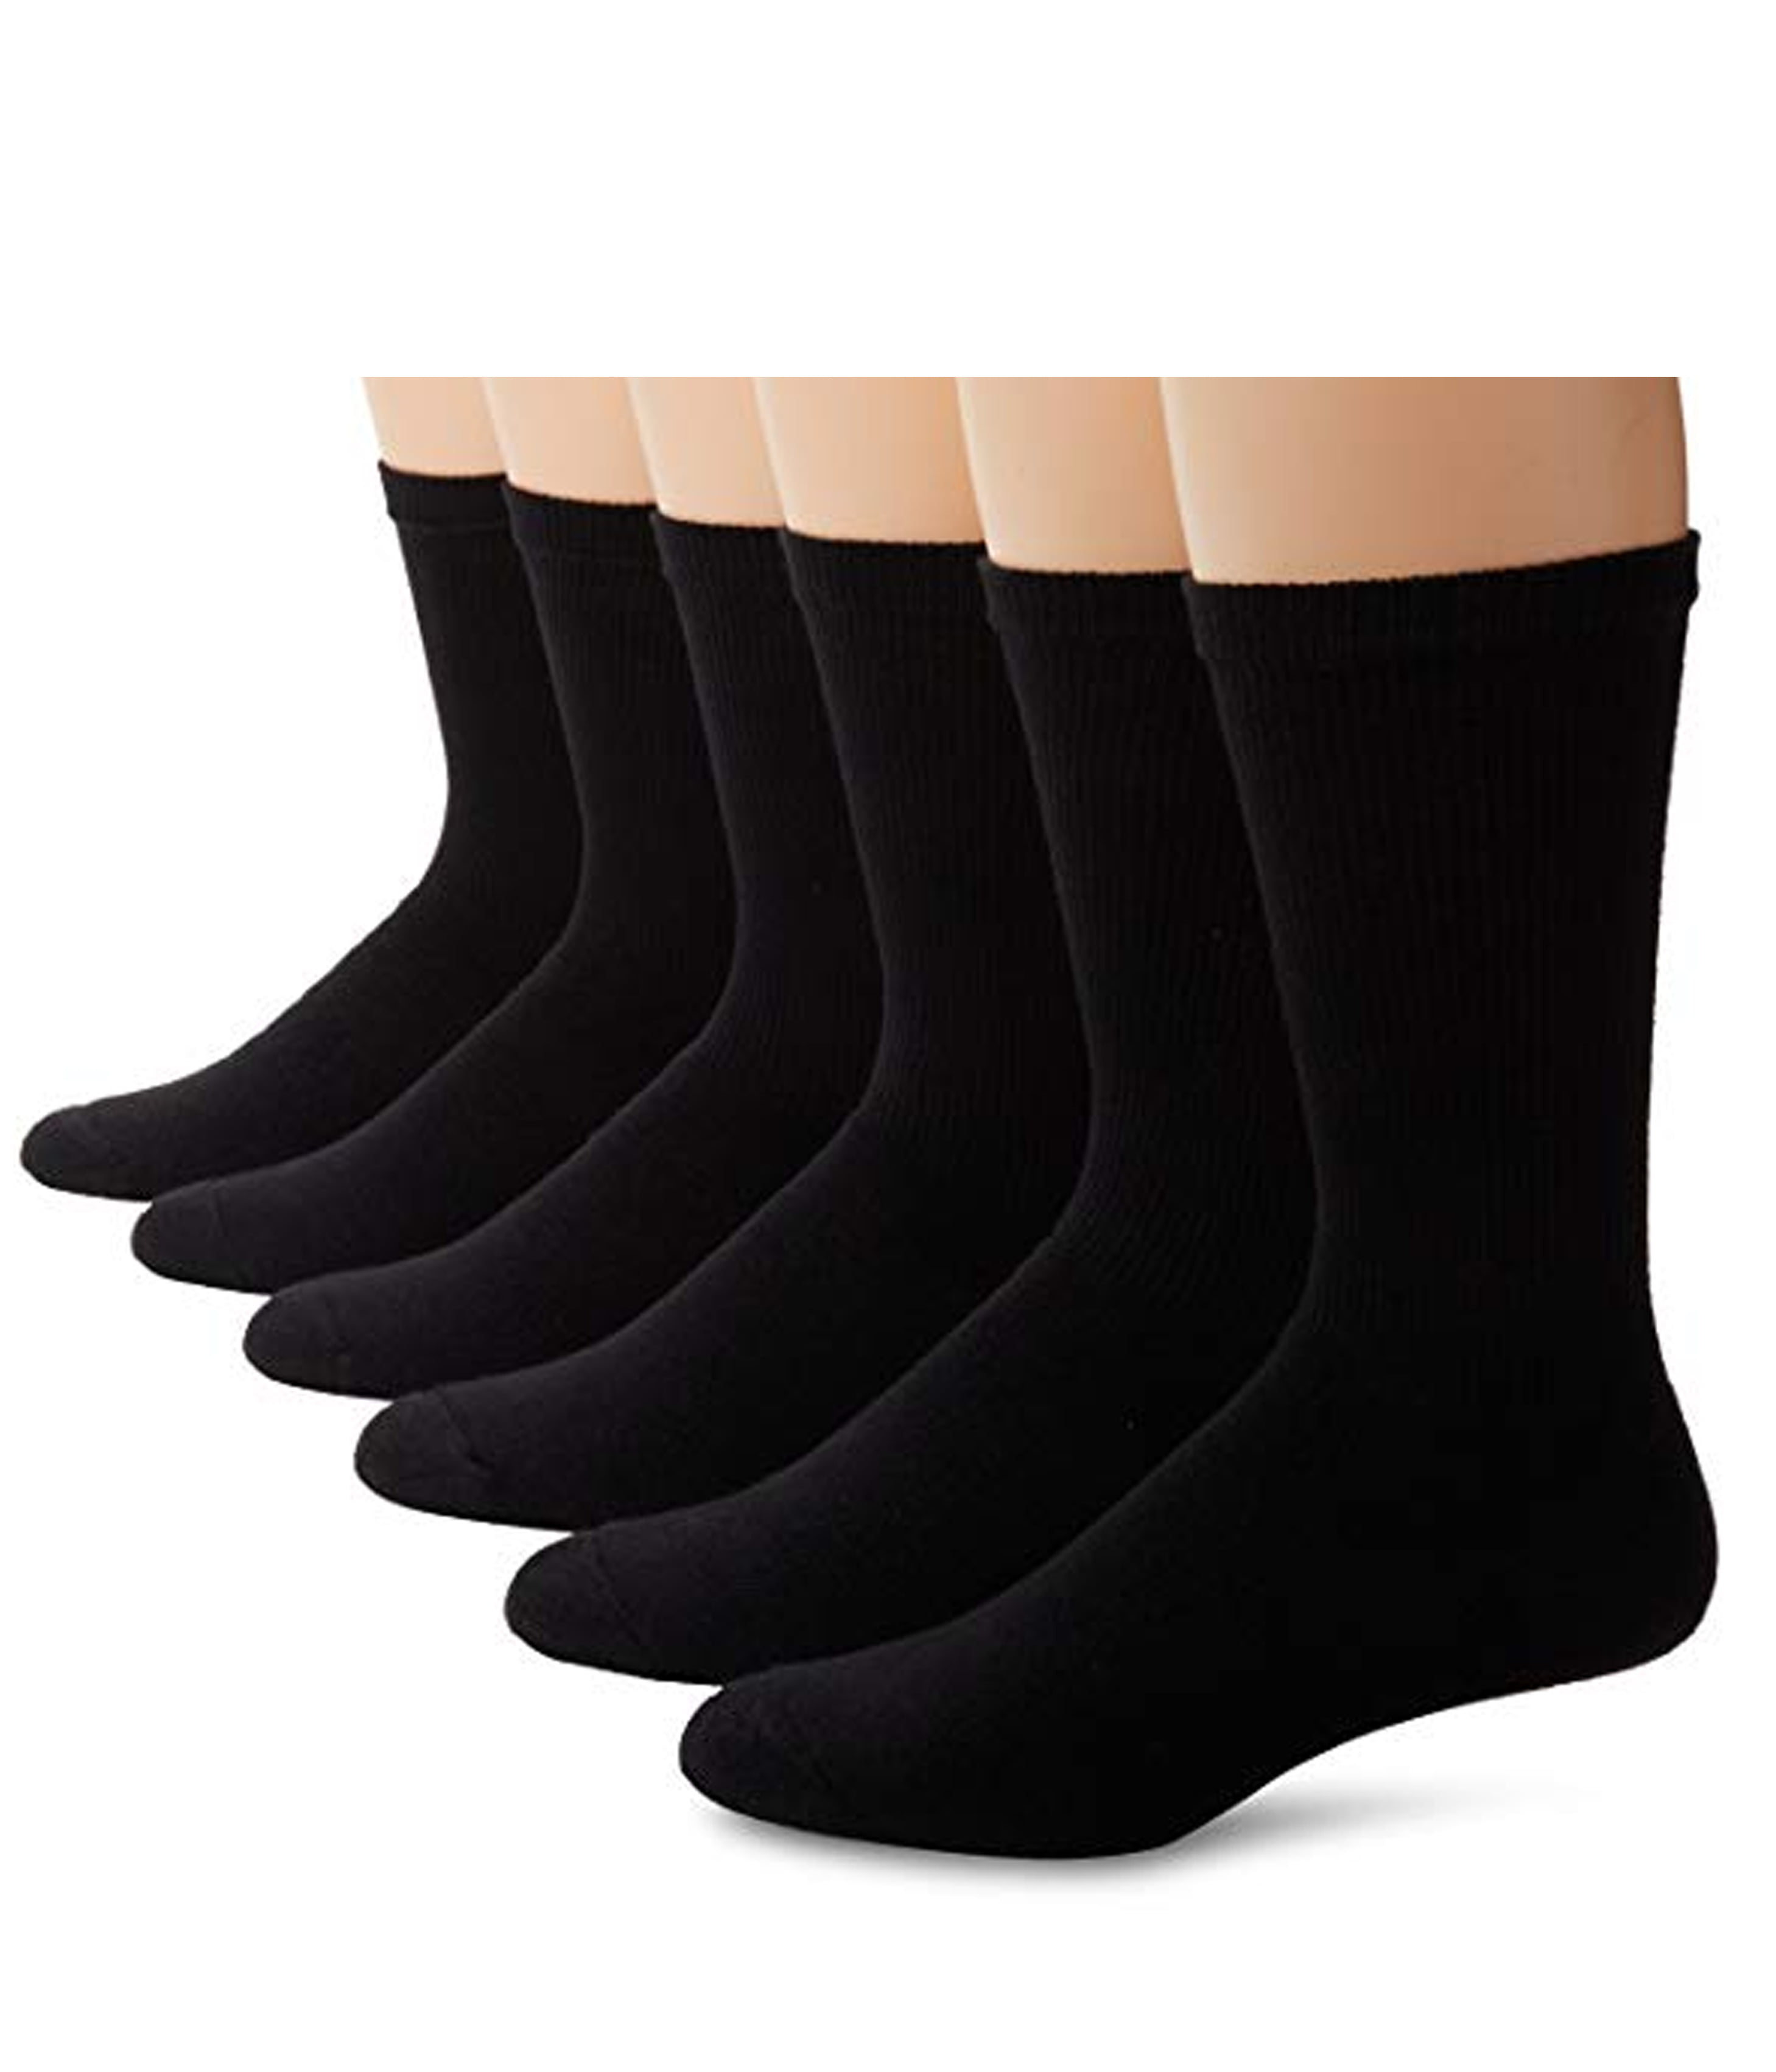 3 6,12 Pairs Mens/Womens Boys/Girls Cotton Socks Rich Suit Socks School Socks 